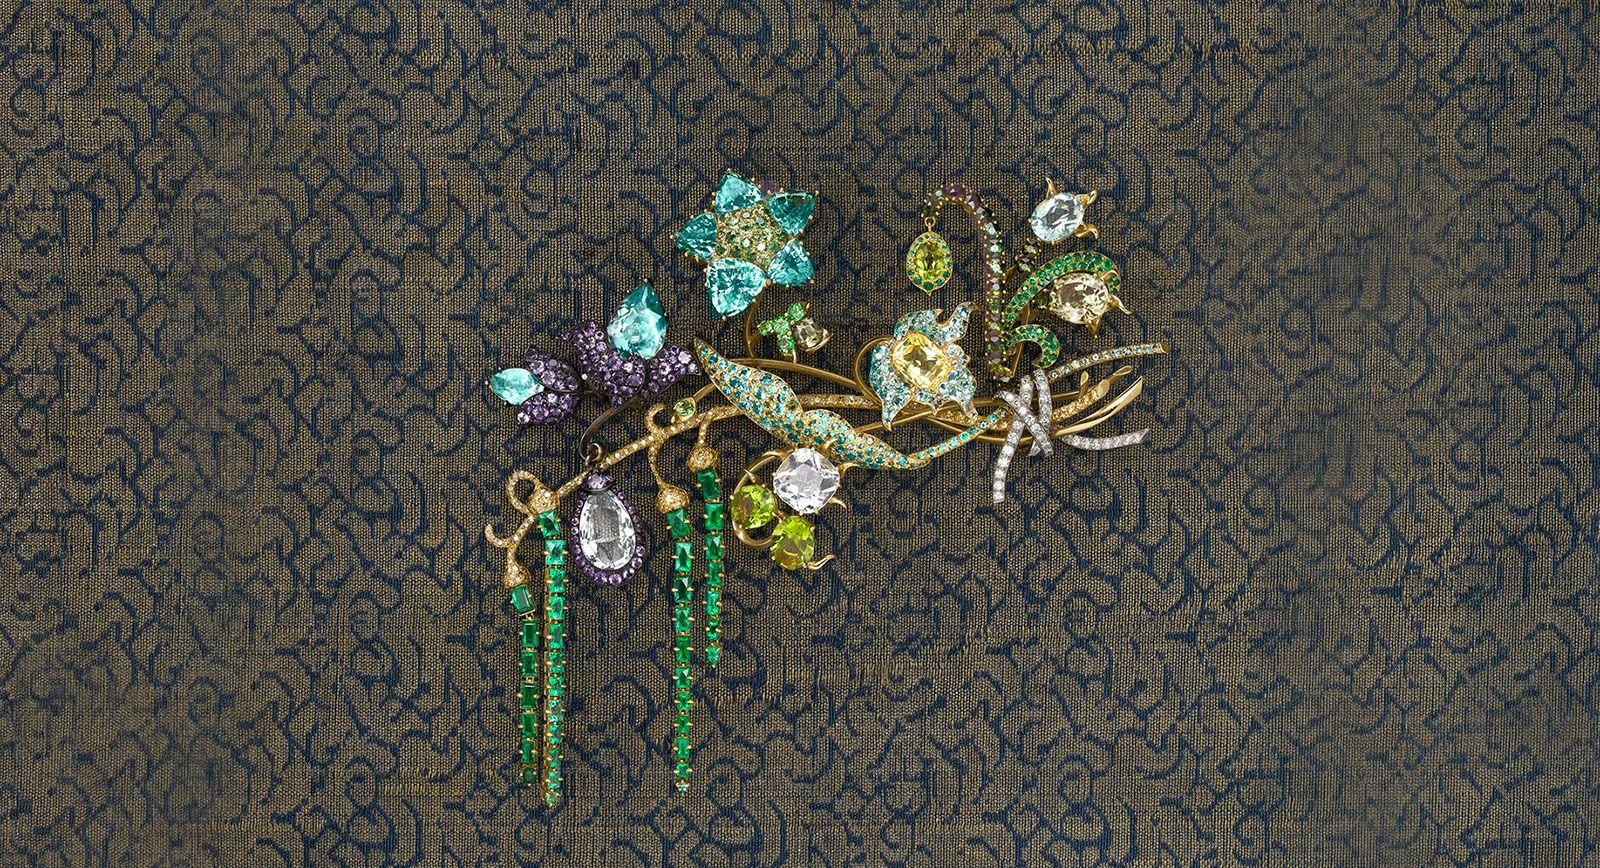 JAR Multicoloured Bouquet brooch with emeralds, amethysts, yellow sapphires, aquamarines, tourmalines, garnets, spodumenes, peridots, diamonds and yellow diamonds in 18k gold, silver and platinum (circa 1990), Christie’s New York 